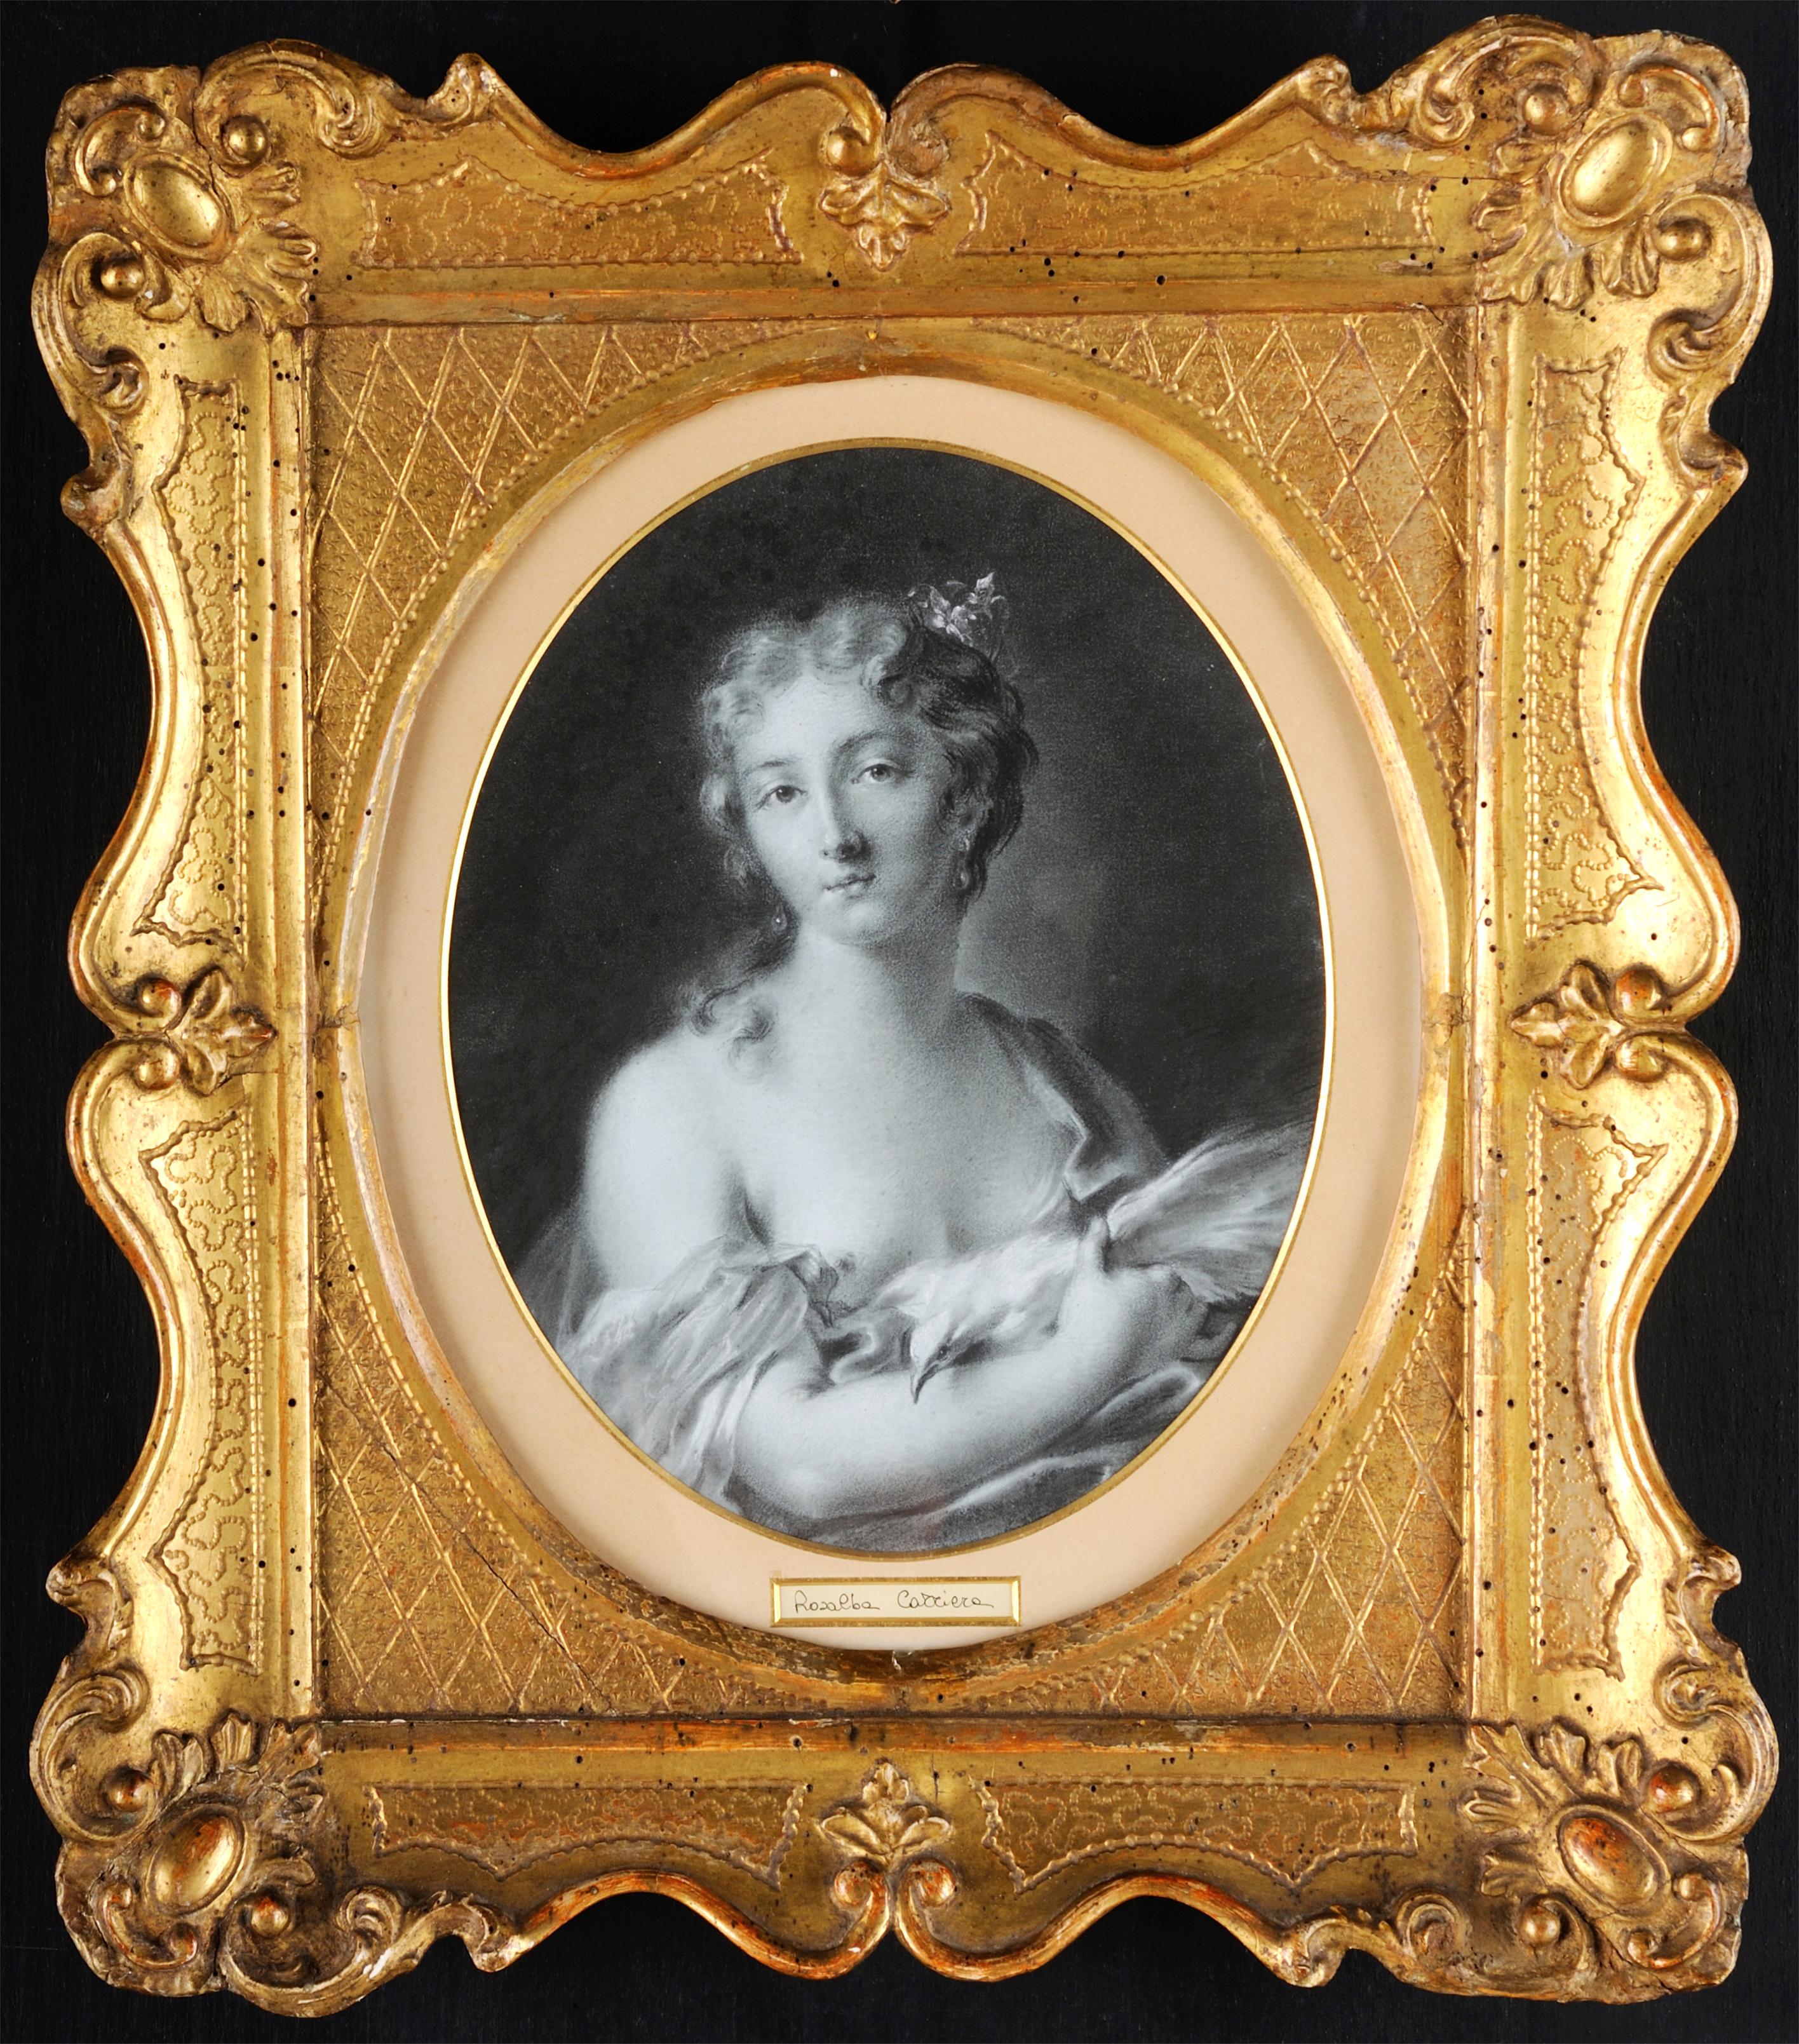 Rosalba Carriera Figurative Painting - 18th century Italian figurative painting Allegory - Portrait pencil paper Venice